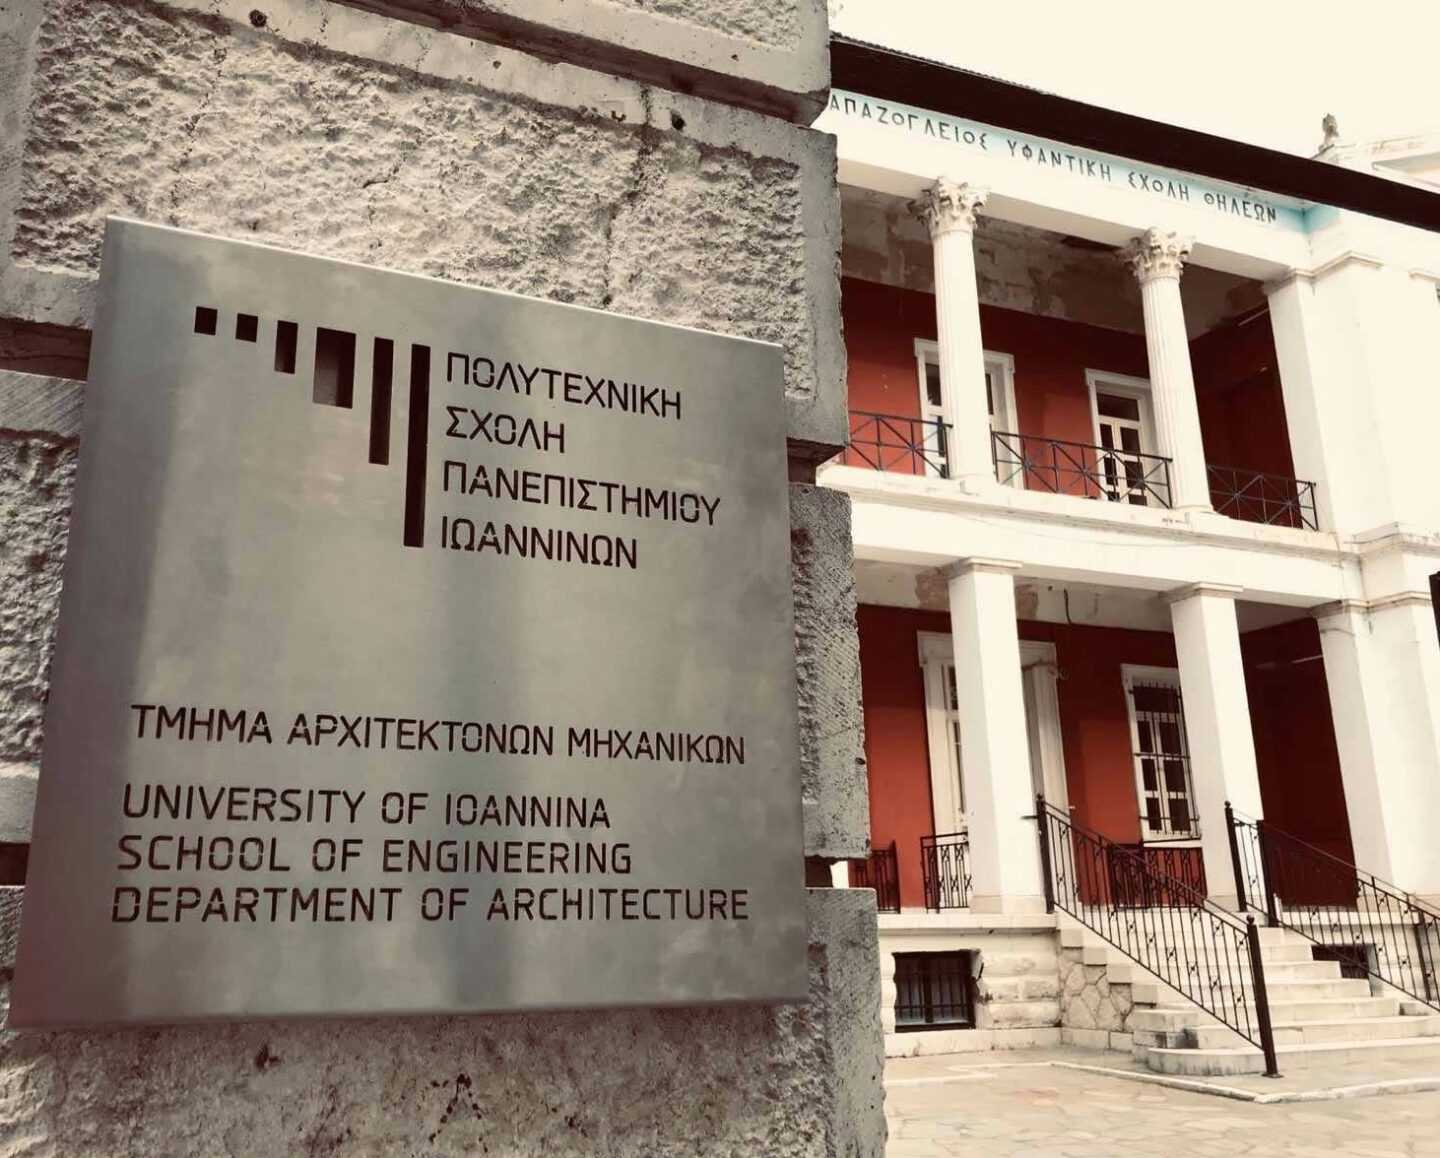 Department of Architecture